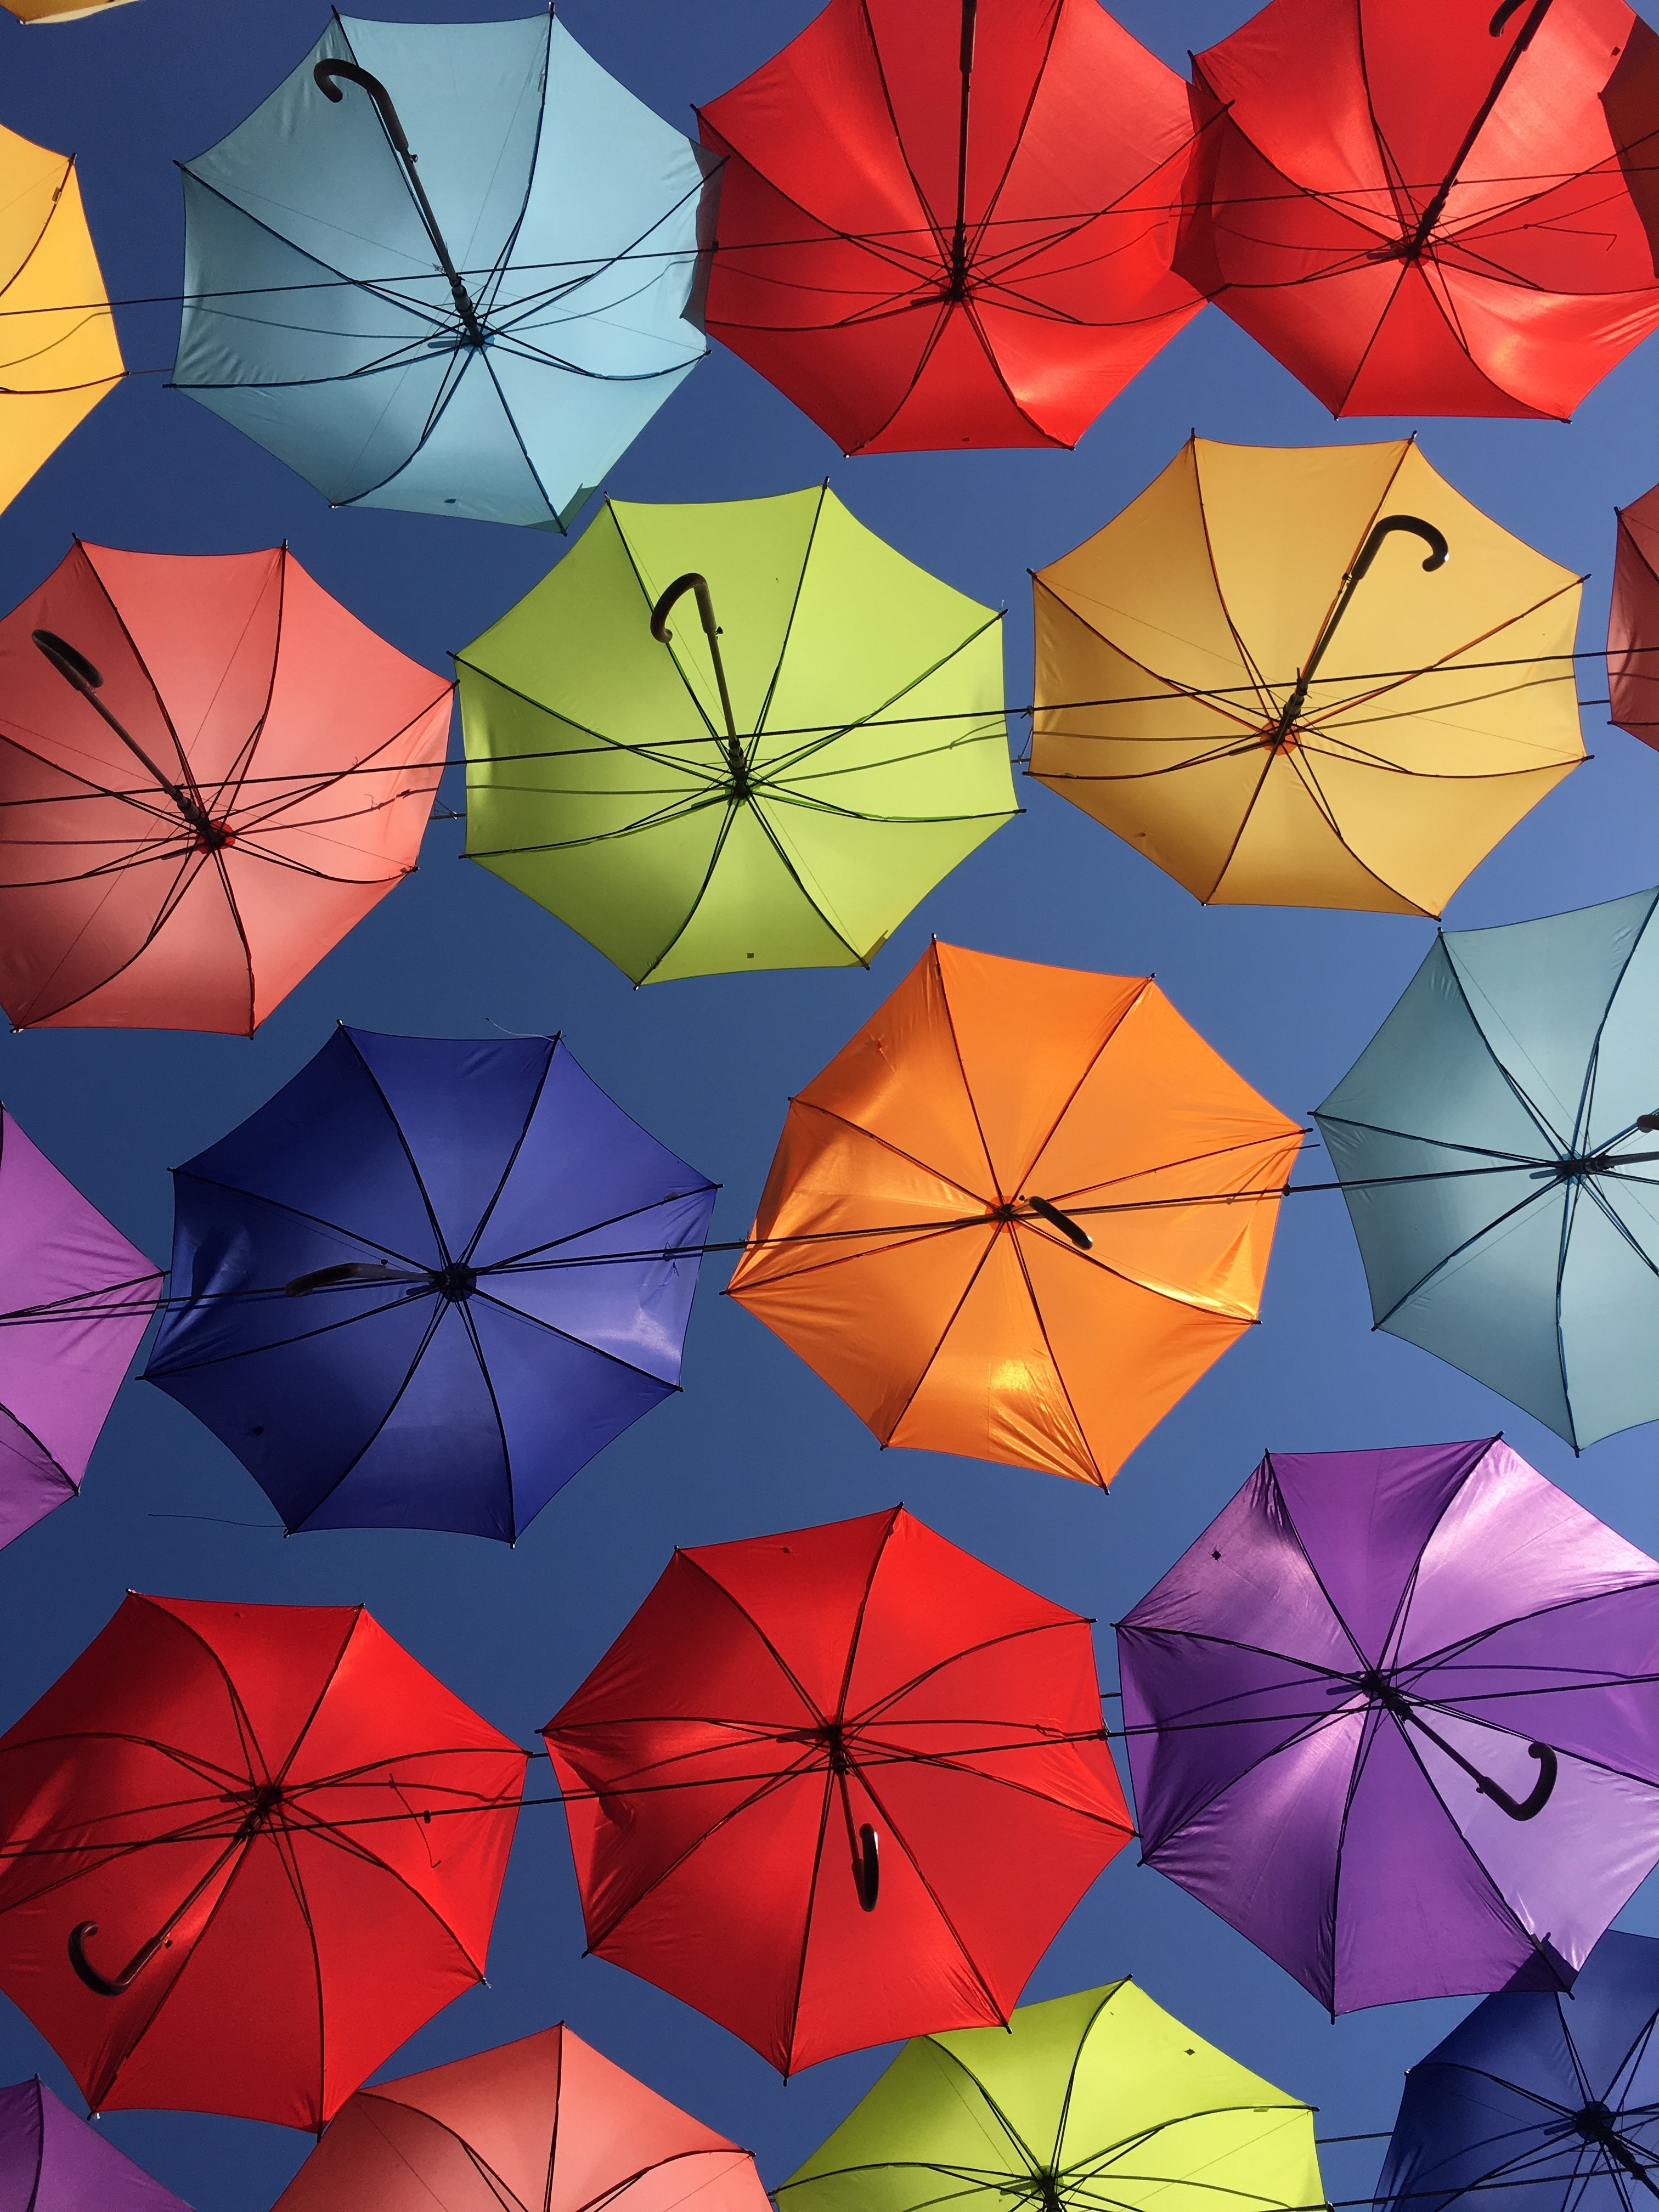 Handy-Wallpaper Dekoration, Motley, Untere Ansicht, Untersicht, Sonnenschirme, Verschiedenes, Sonstige, Regenschirme, Regenschirm, Mehrfarbig kostenlos herunterladen.